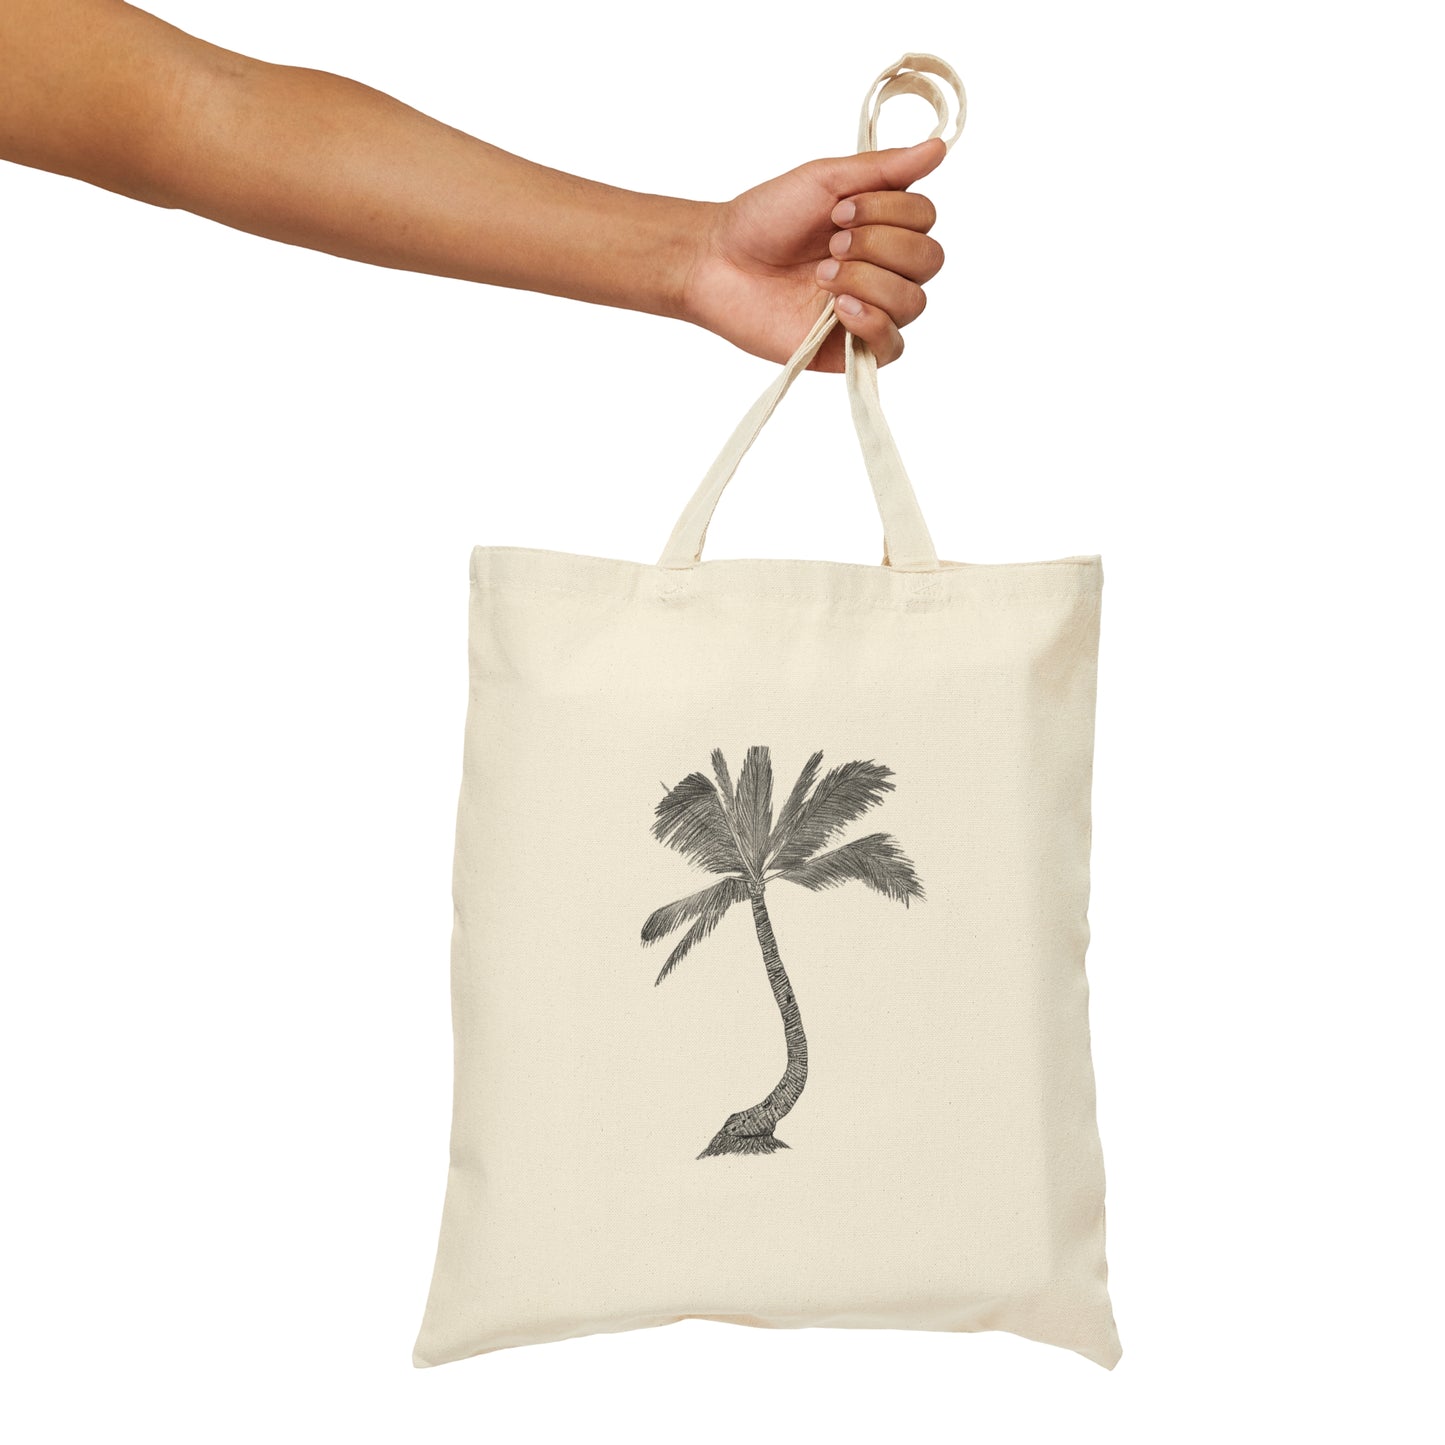 Niu (Coconut) Tree Cotton Canvas Tote Bag